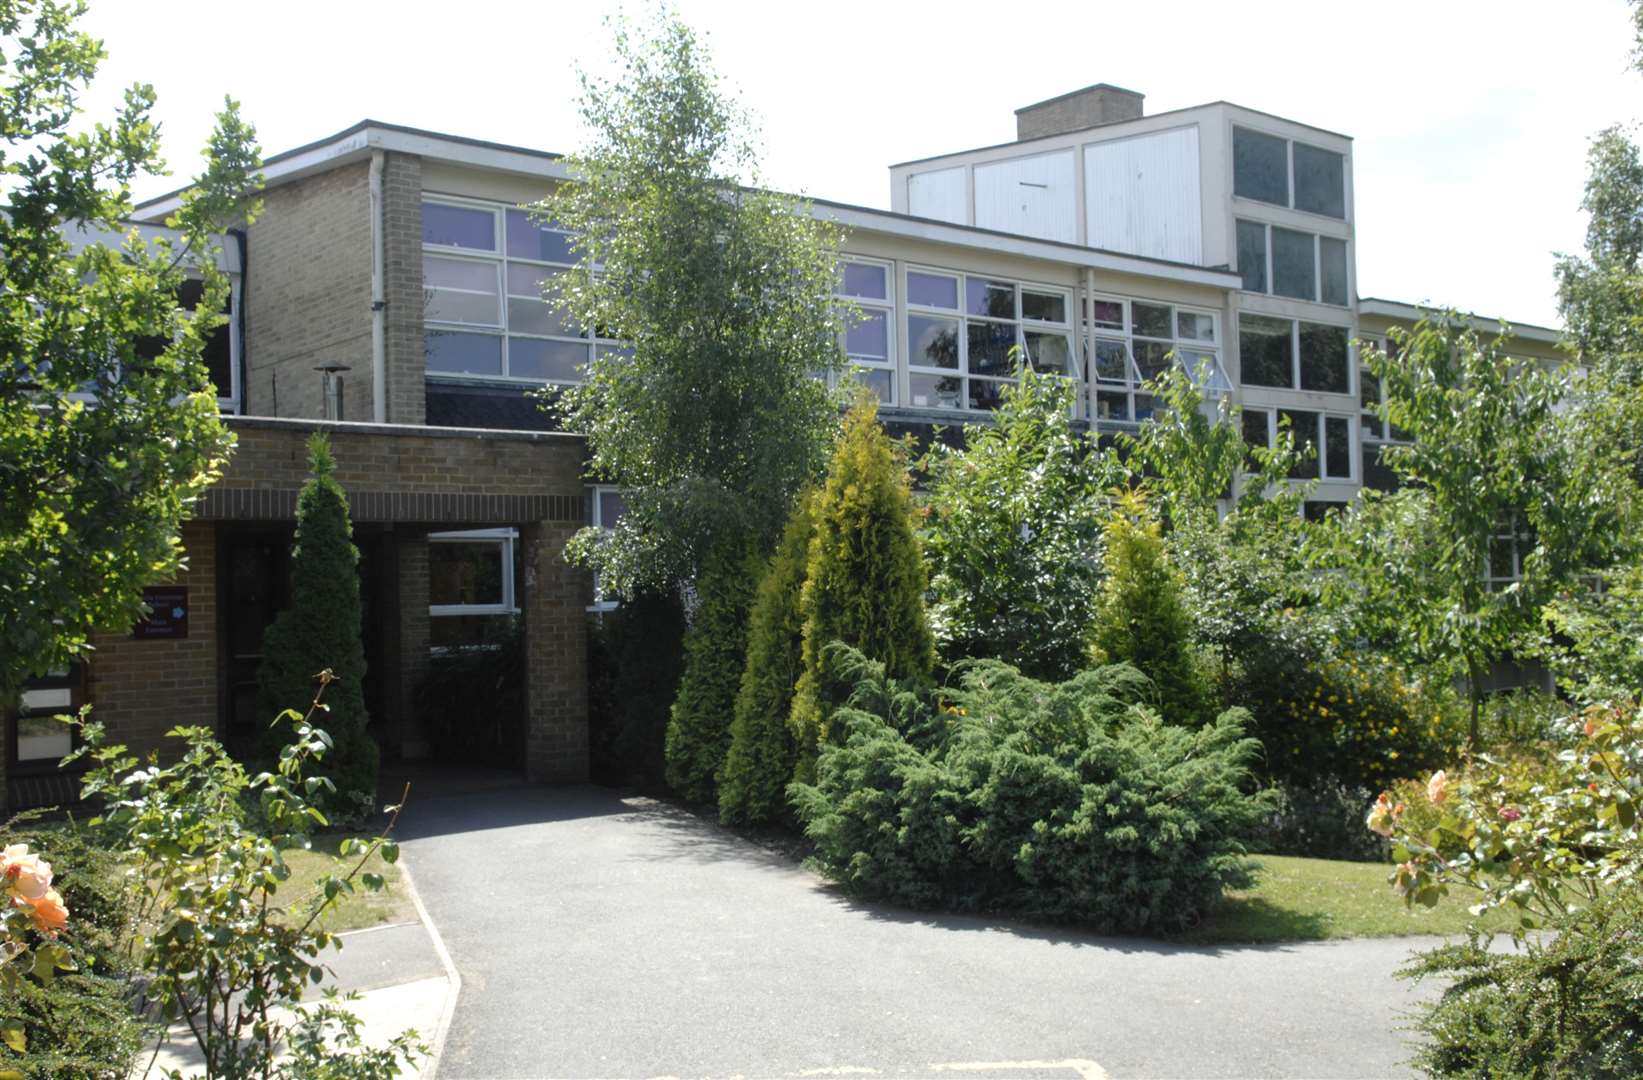 Invicta Grammar School was last visited in 2012, when it received an ‘outstanding’ verdict